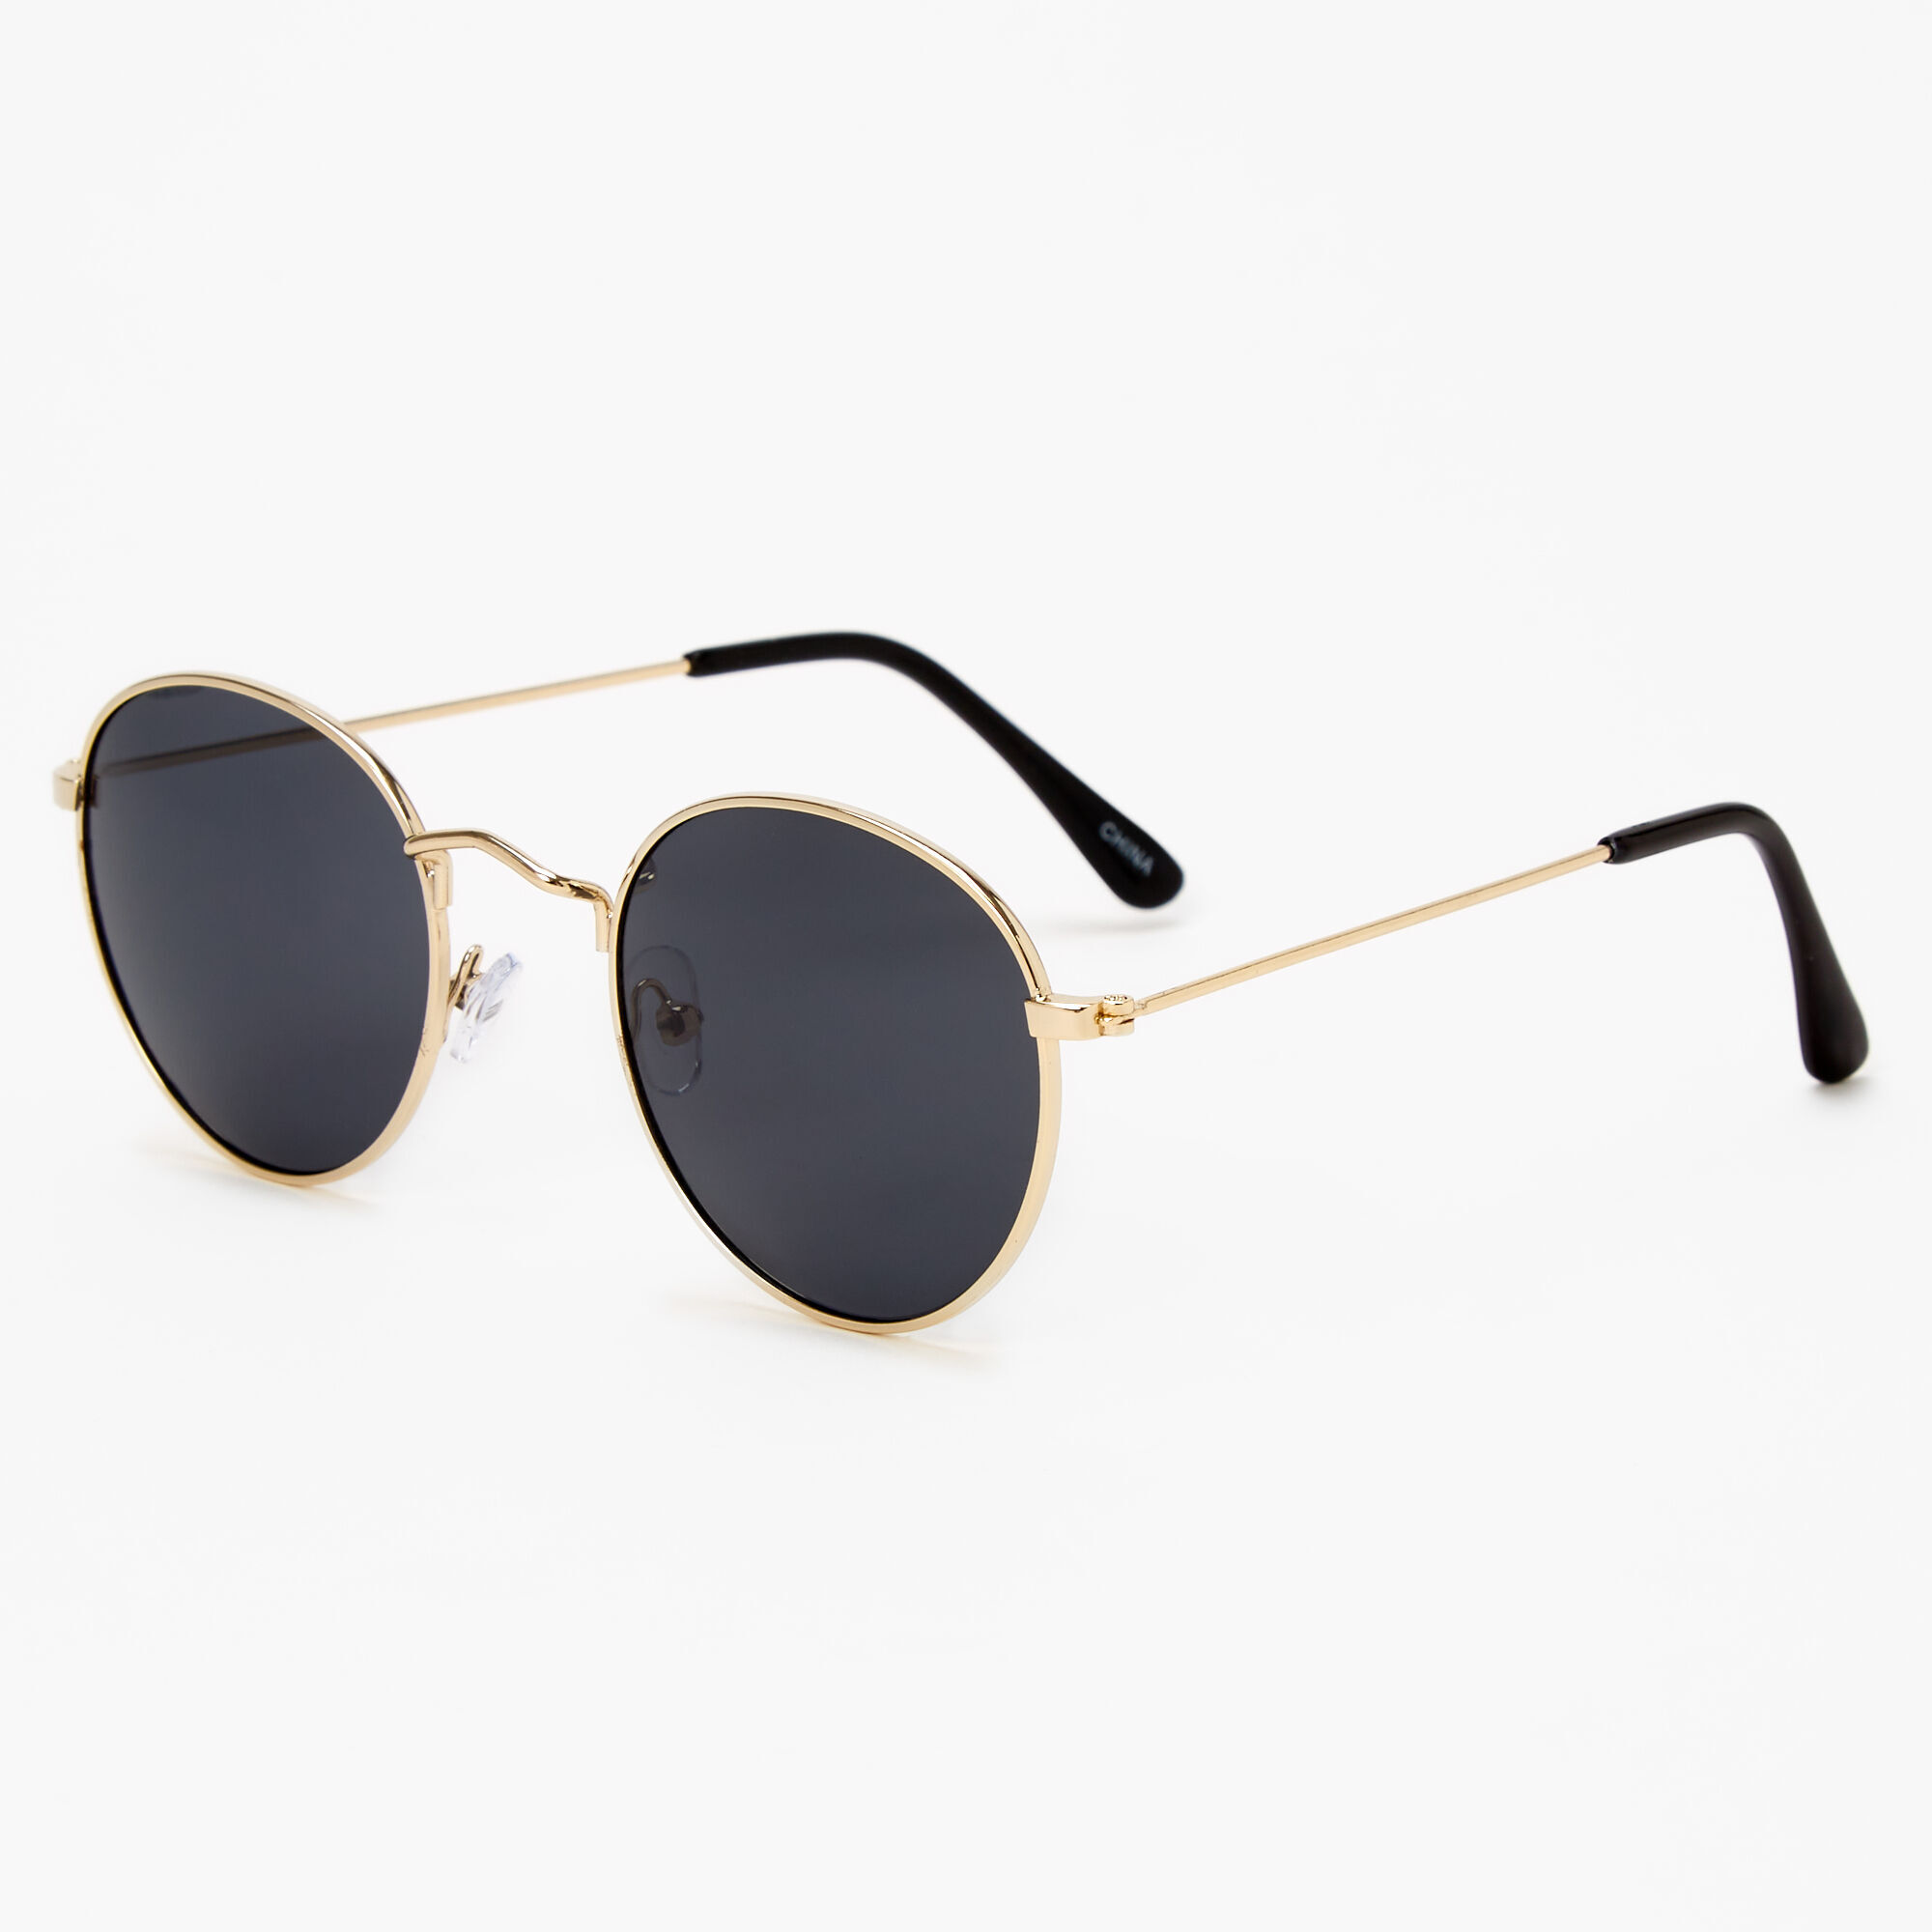 Gravity Shades Circular Gold (50mm) Frame Black Lens Sunglasses